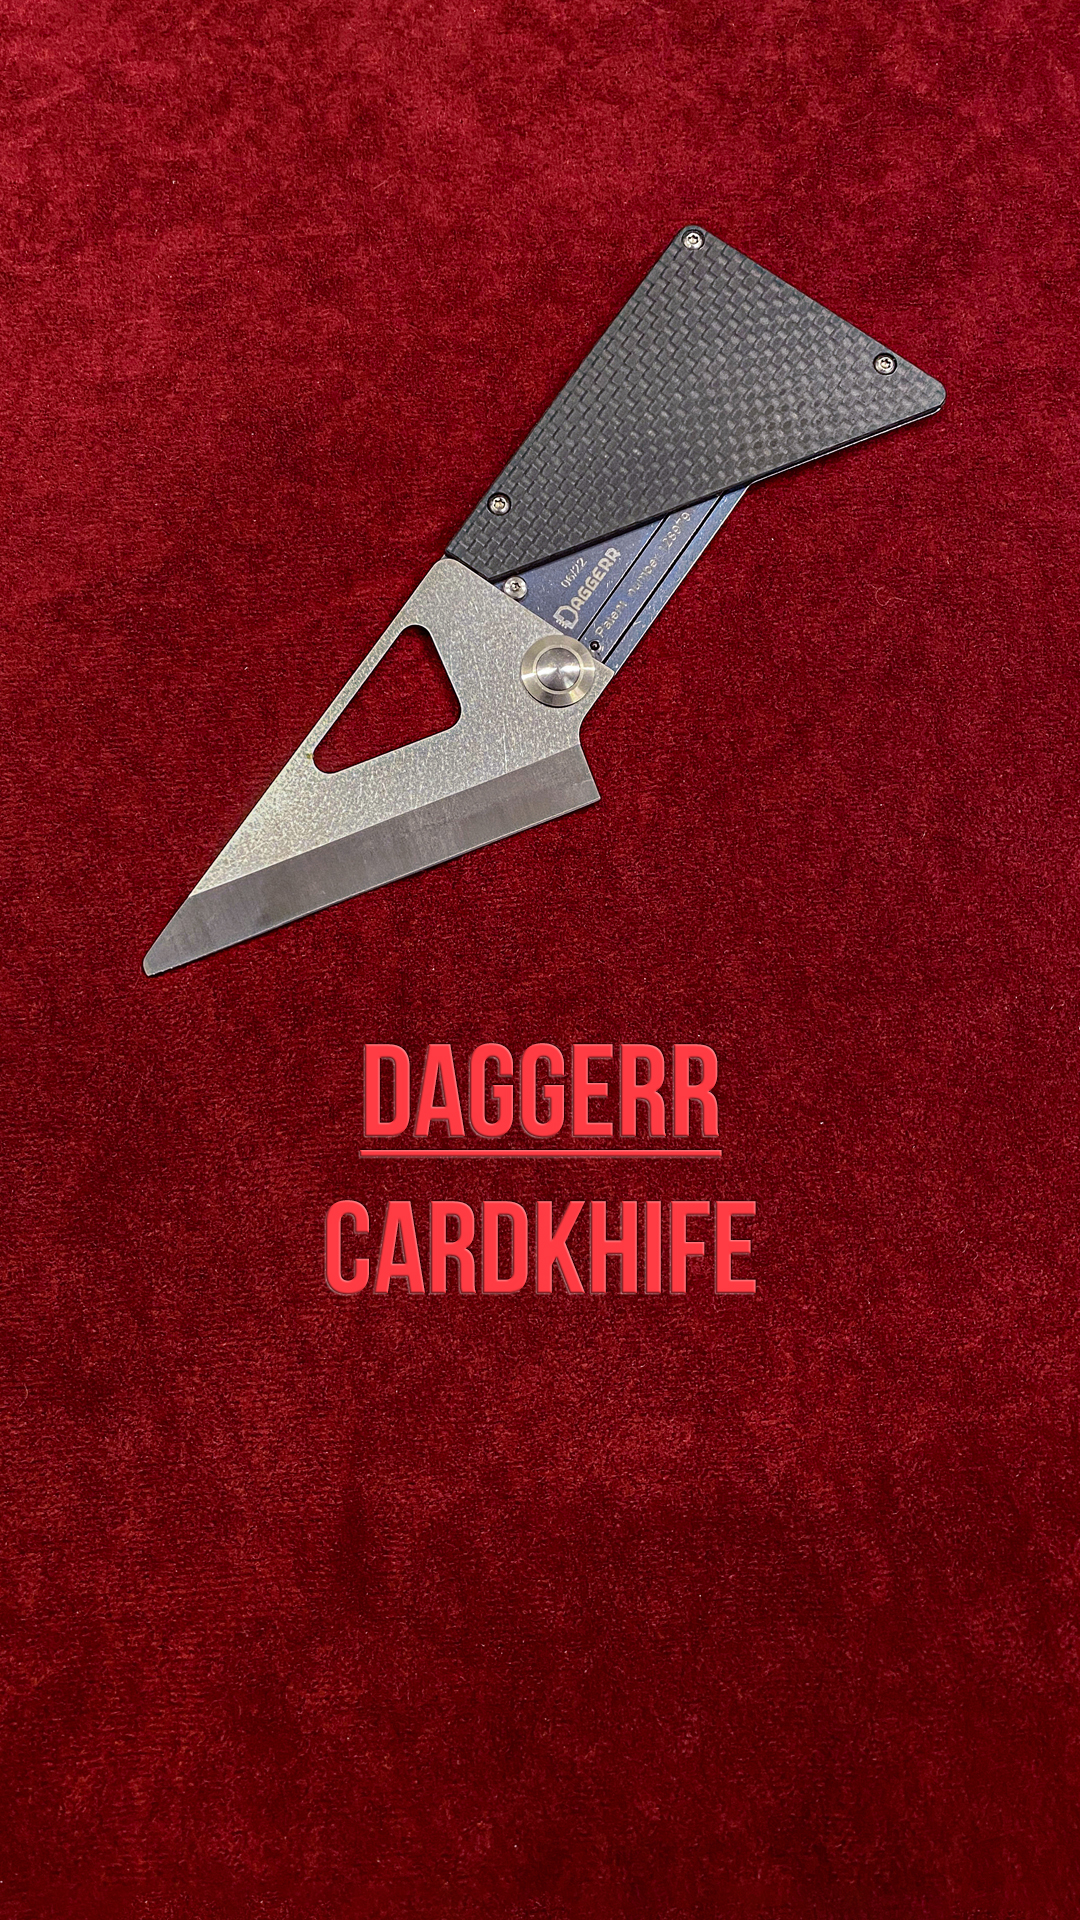 Daggerr Cardkhife